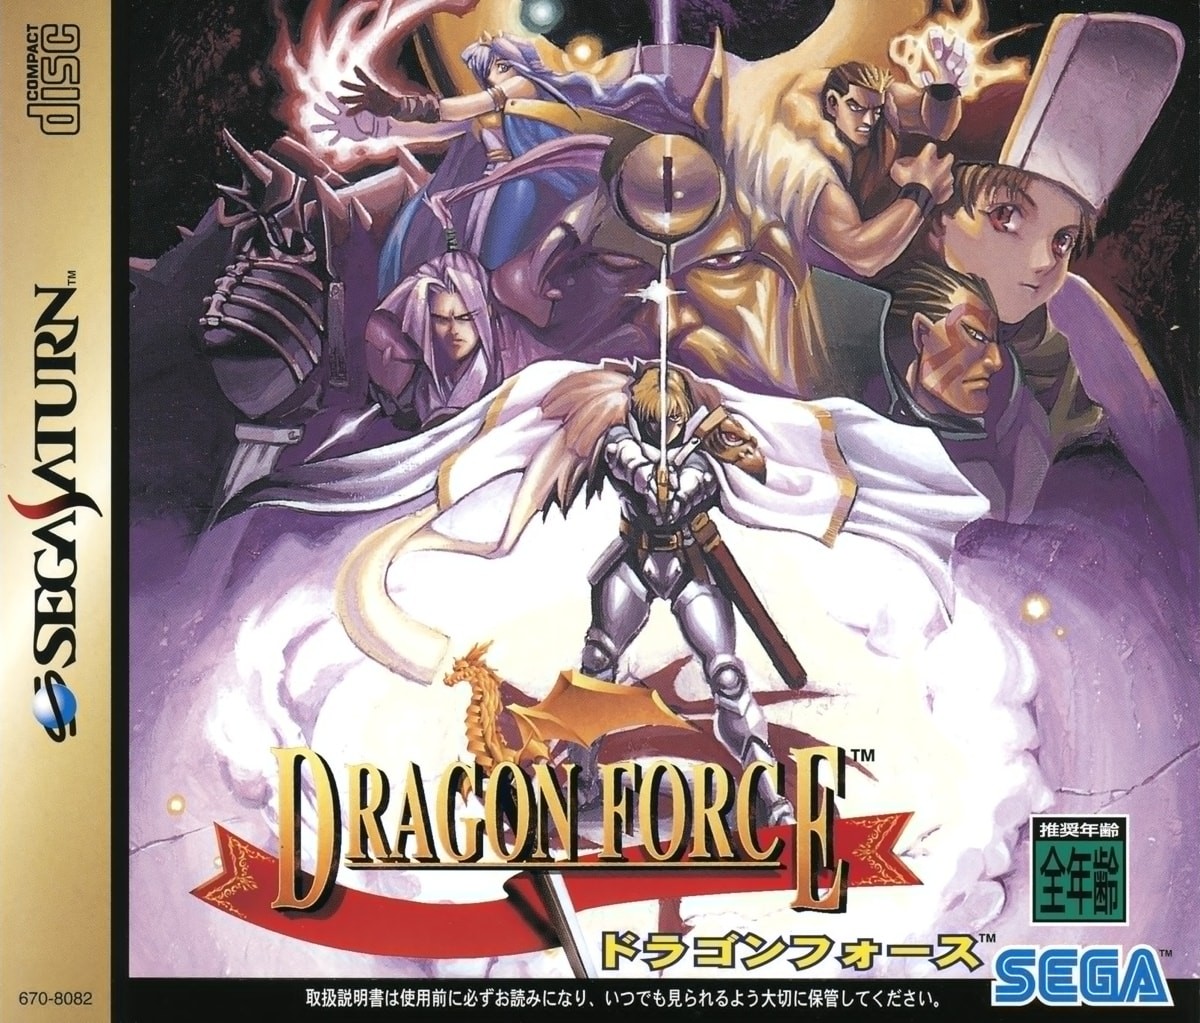 Capa do jogo Dragon Force